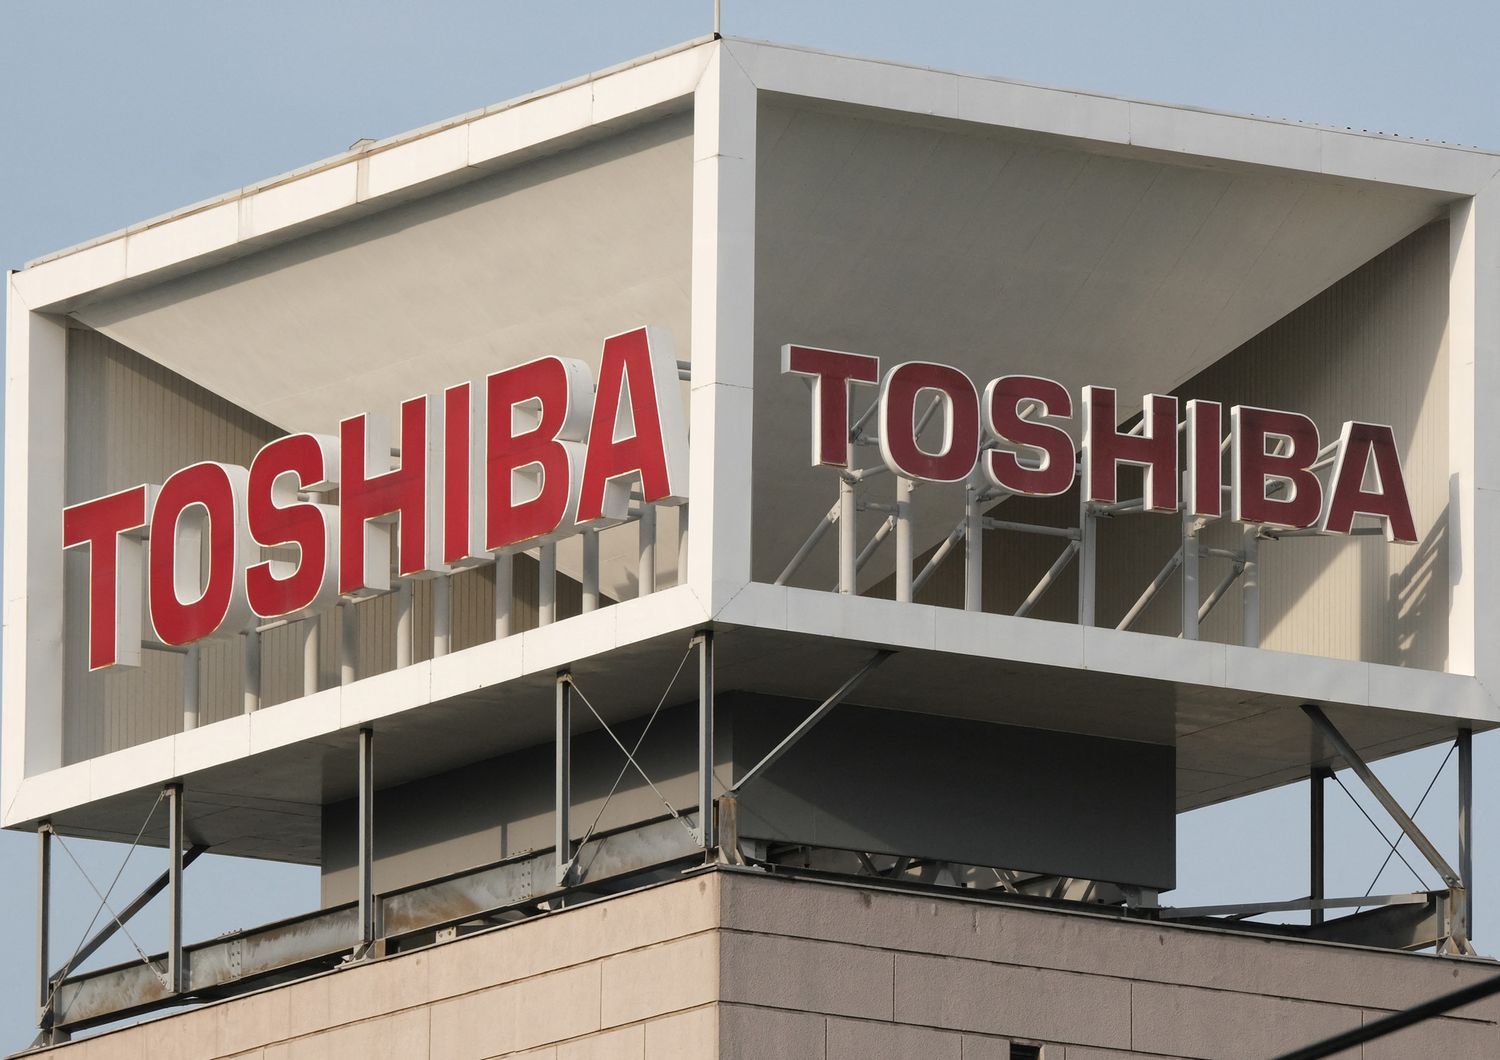 Toshiba&nbsp;